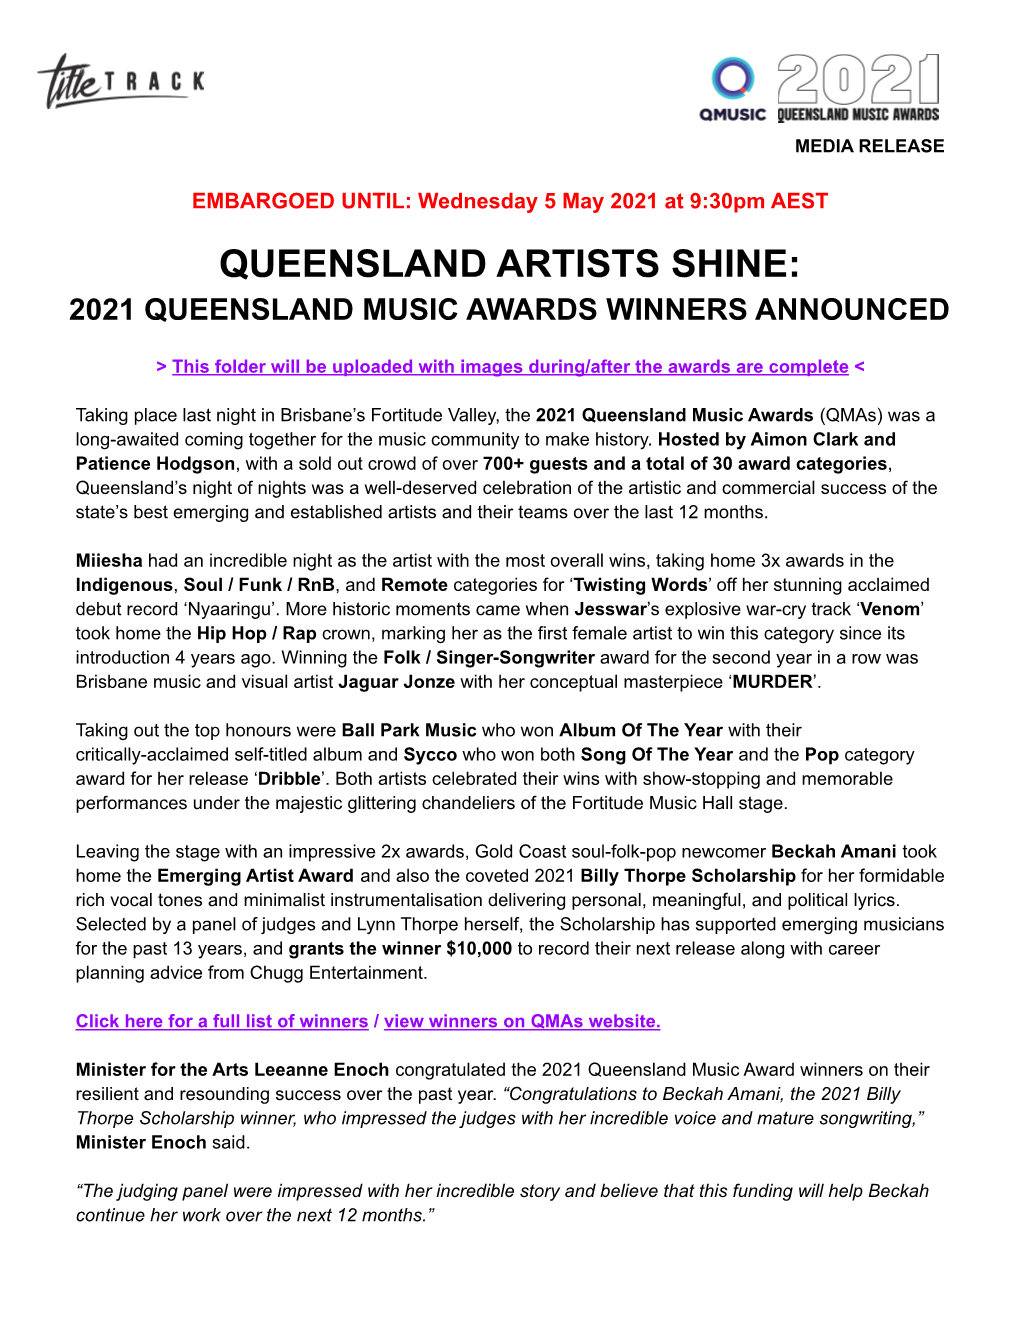 2021 Queensland Music Awards Winners Announced